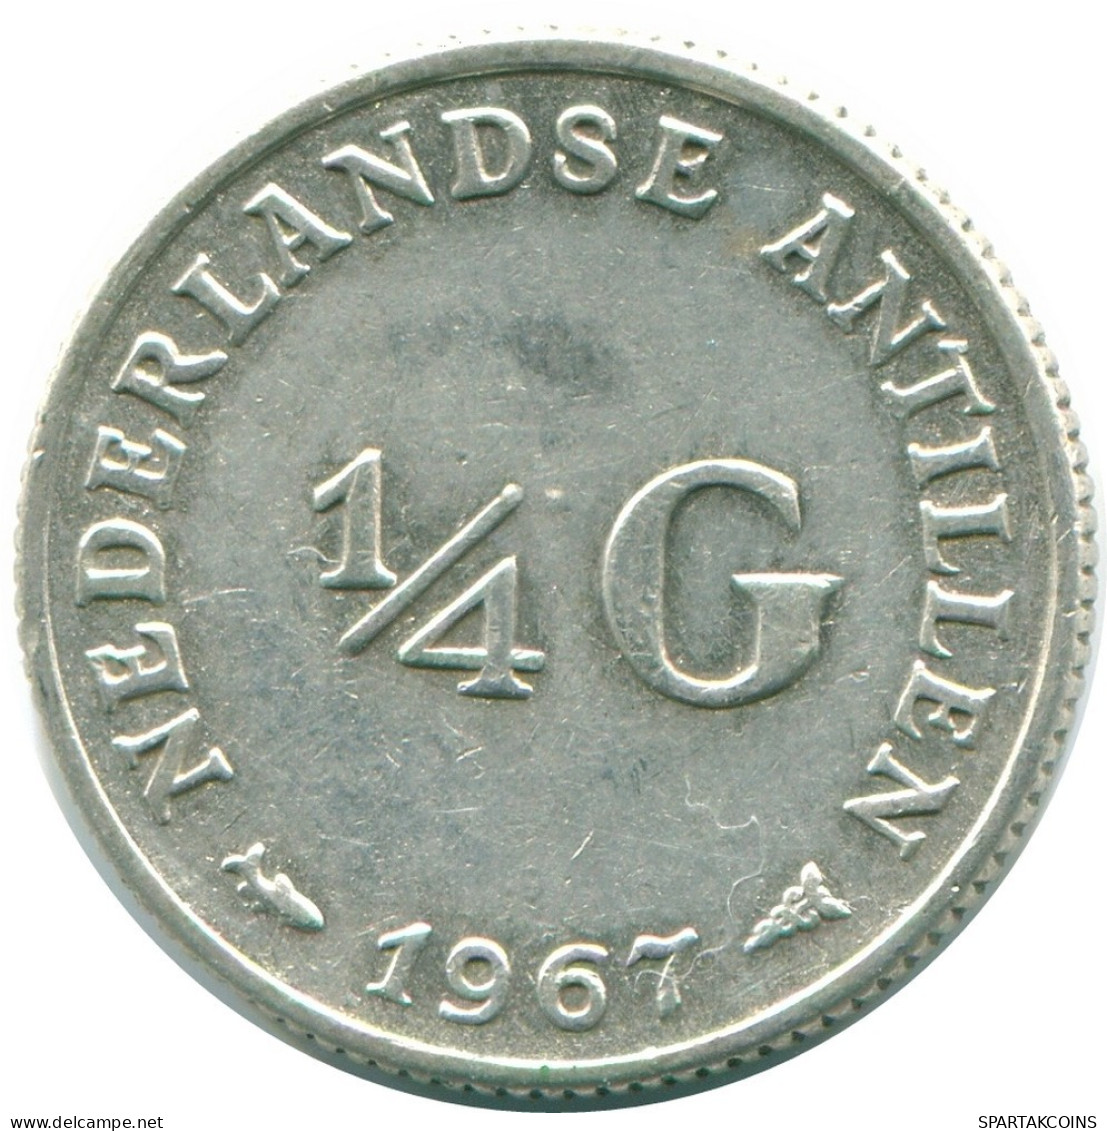 1/4 GULDEN 1967 NETHERLANDS ANTILLES SILVER Colonial Coin #NL11470.4.U.A - Niederländische Antillen